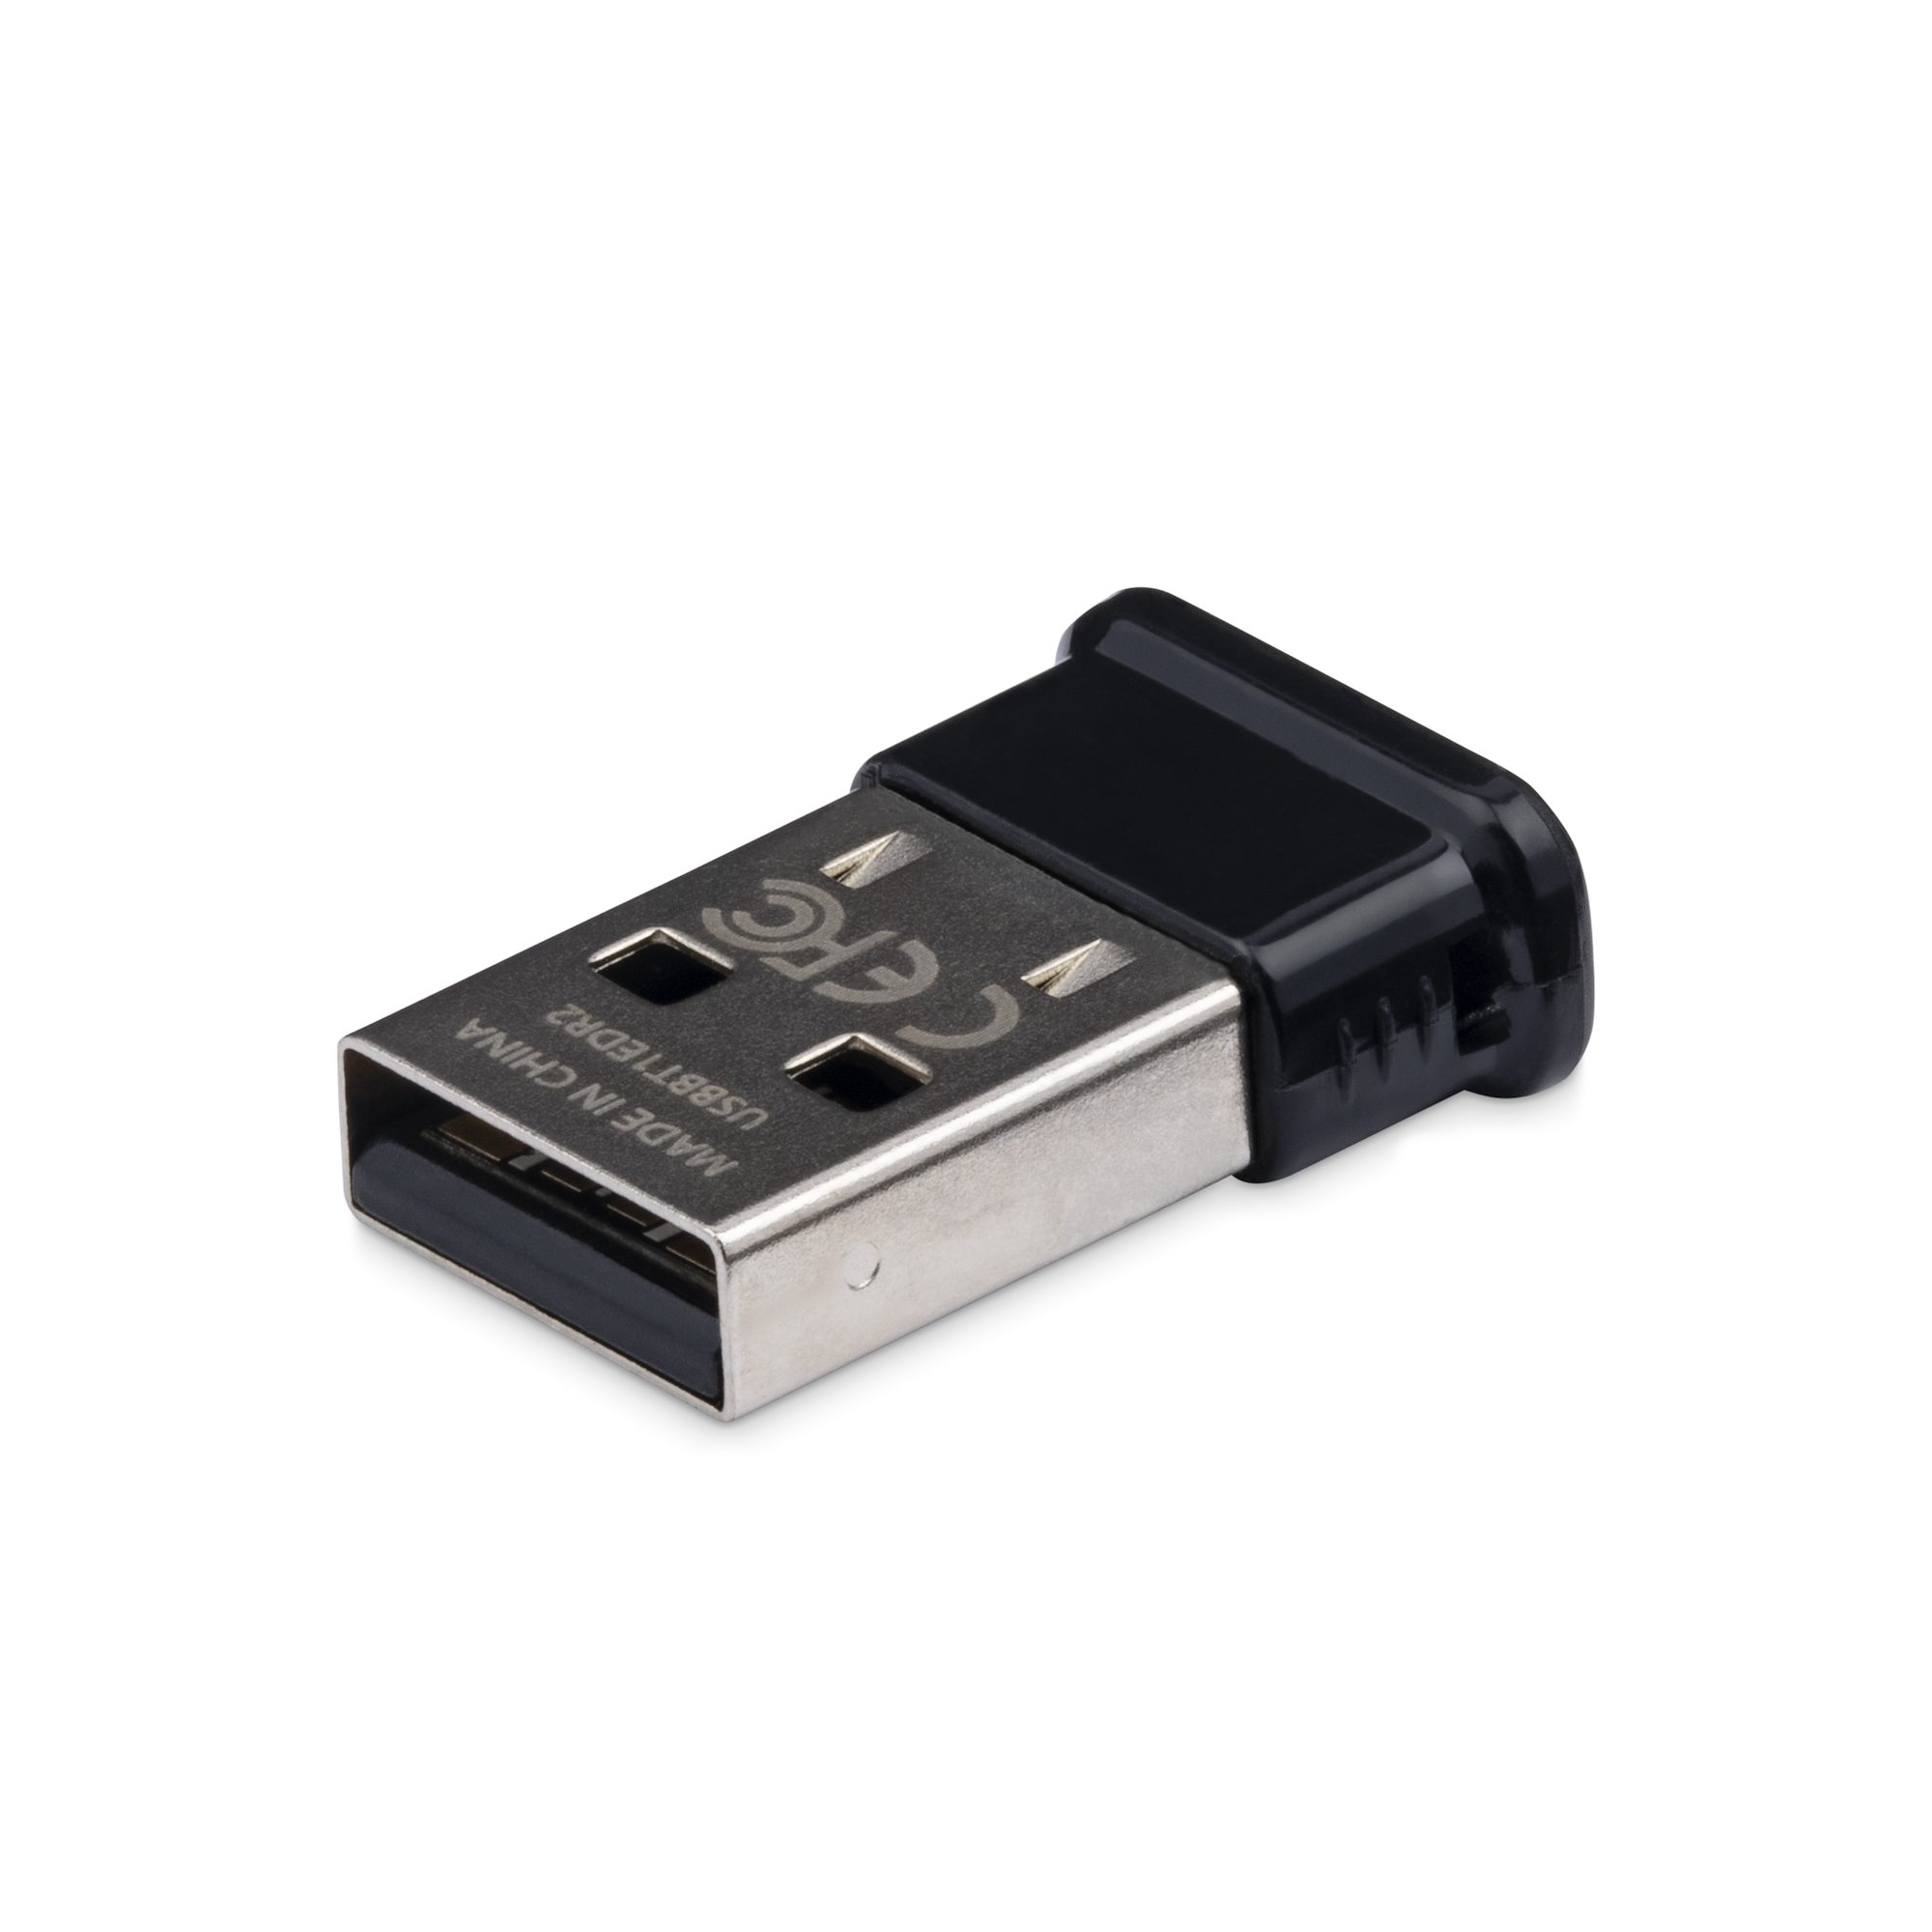 Mini USB Bluetooth 2.1 Adapter - Class 1 - Adaptadores Infrarrojos